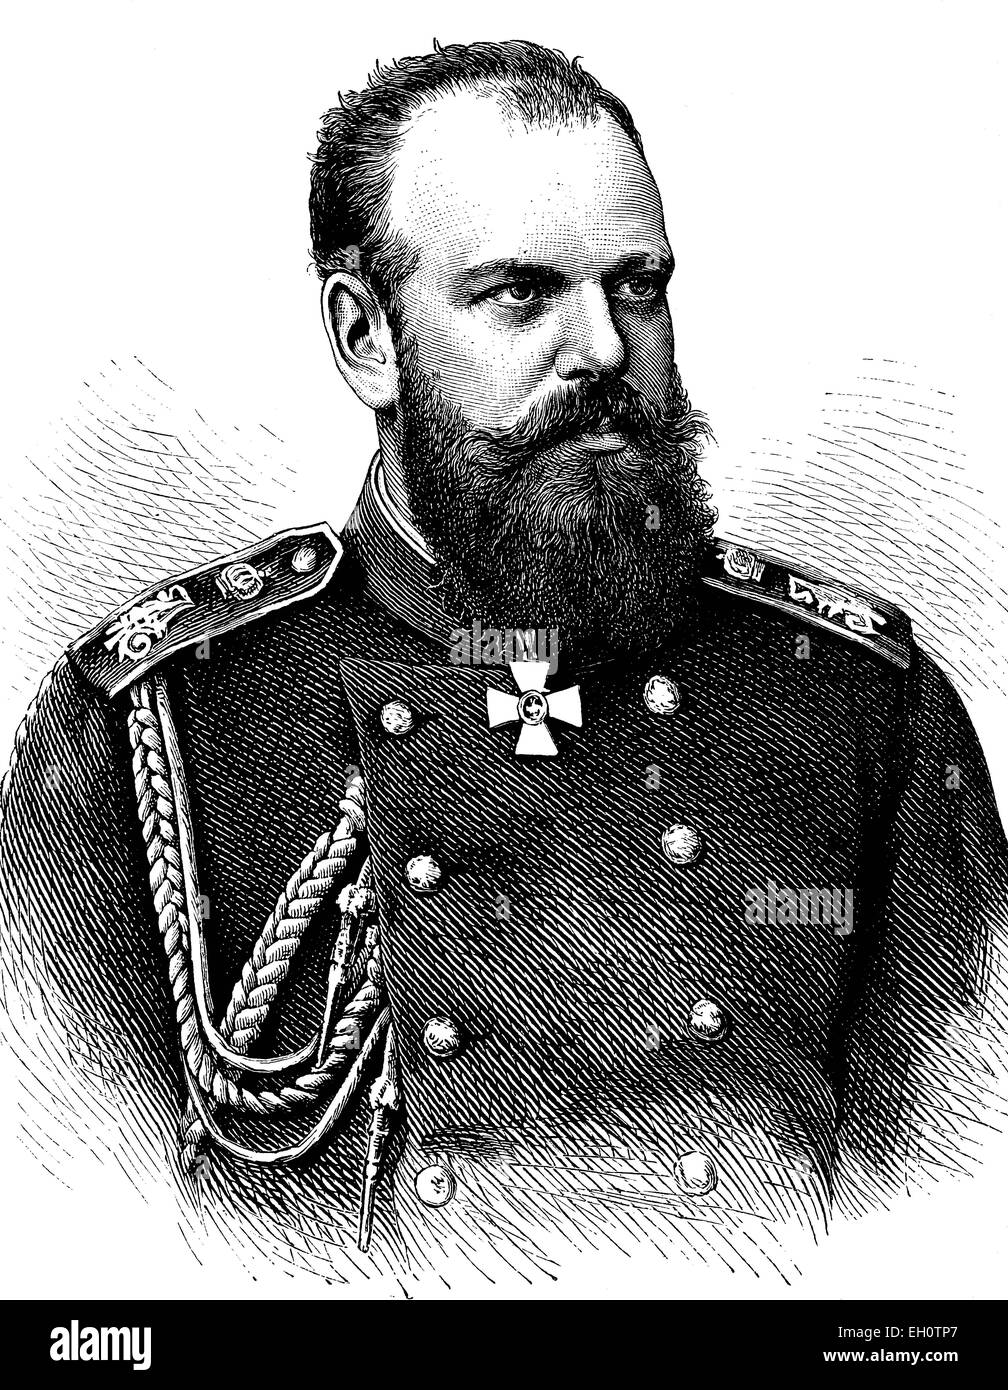 Alexandre III, 1845-1894, Empereur de Russie, illustration historique, vers 1886 Banque D'Images